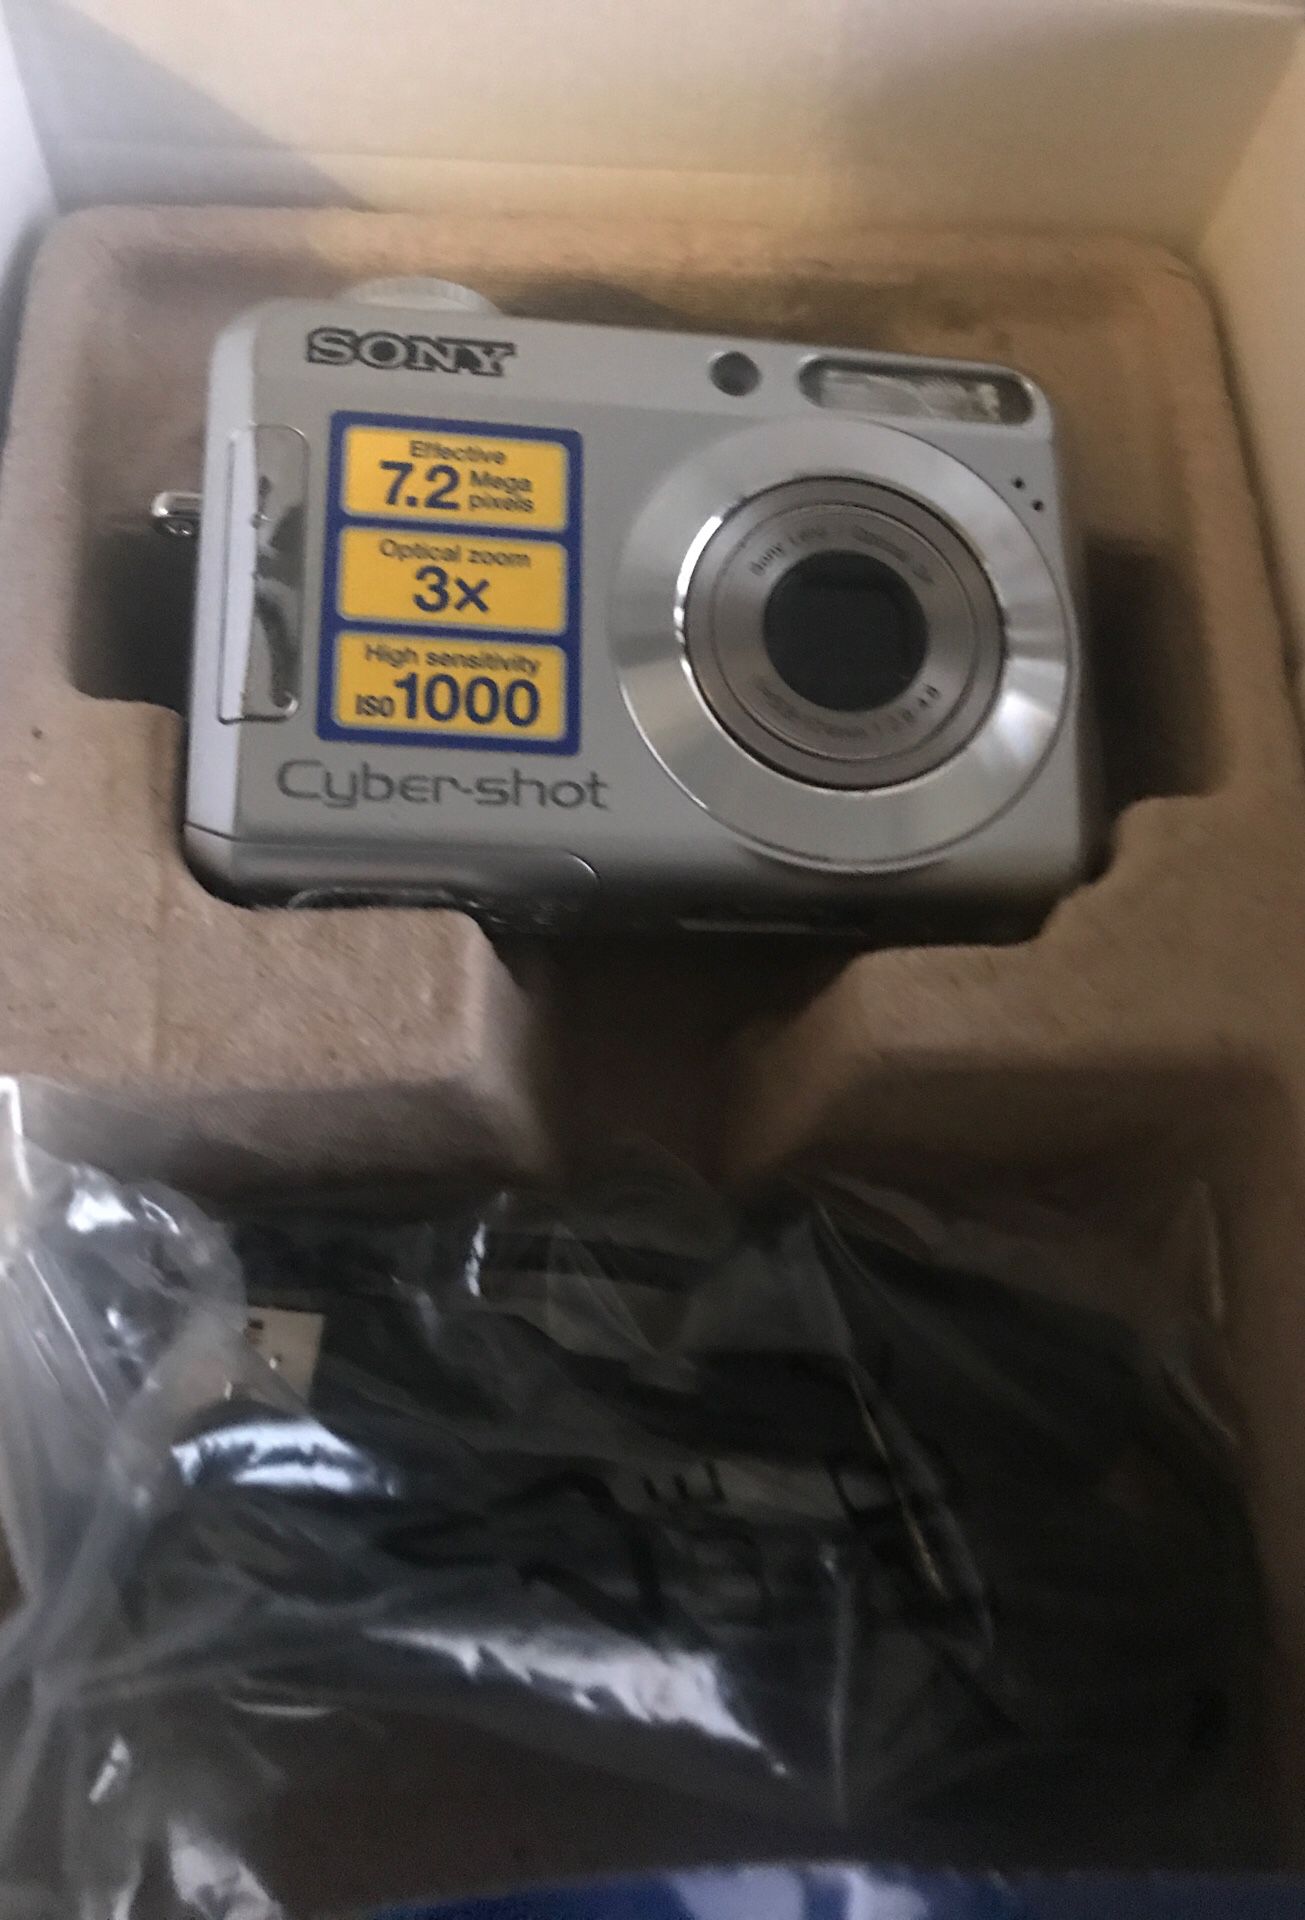 Sony Cybershot S650 7.2MP Digital Camera with 3x Optical Zoom